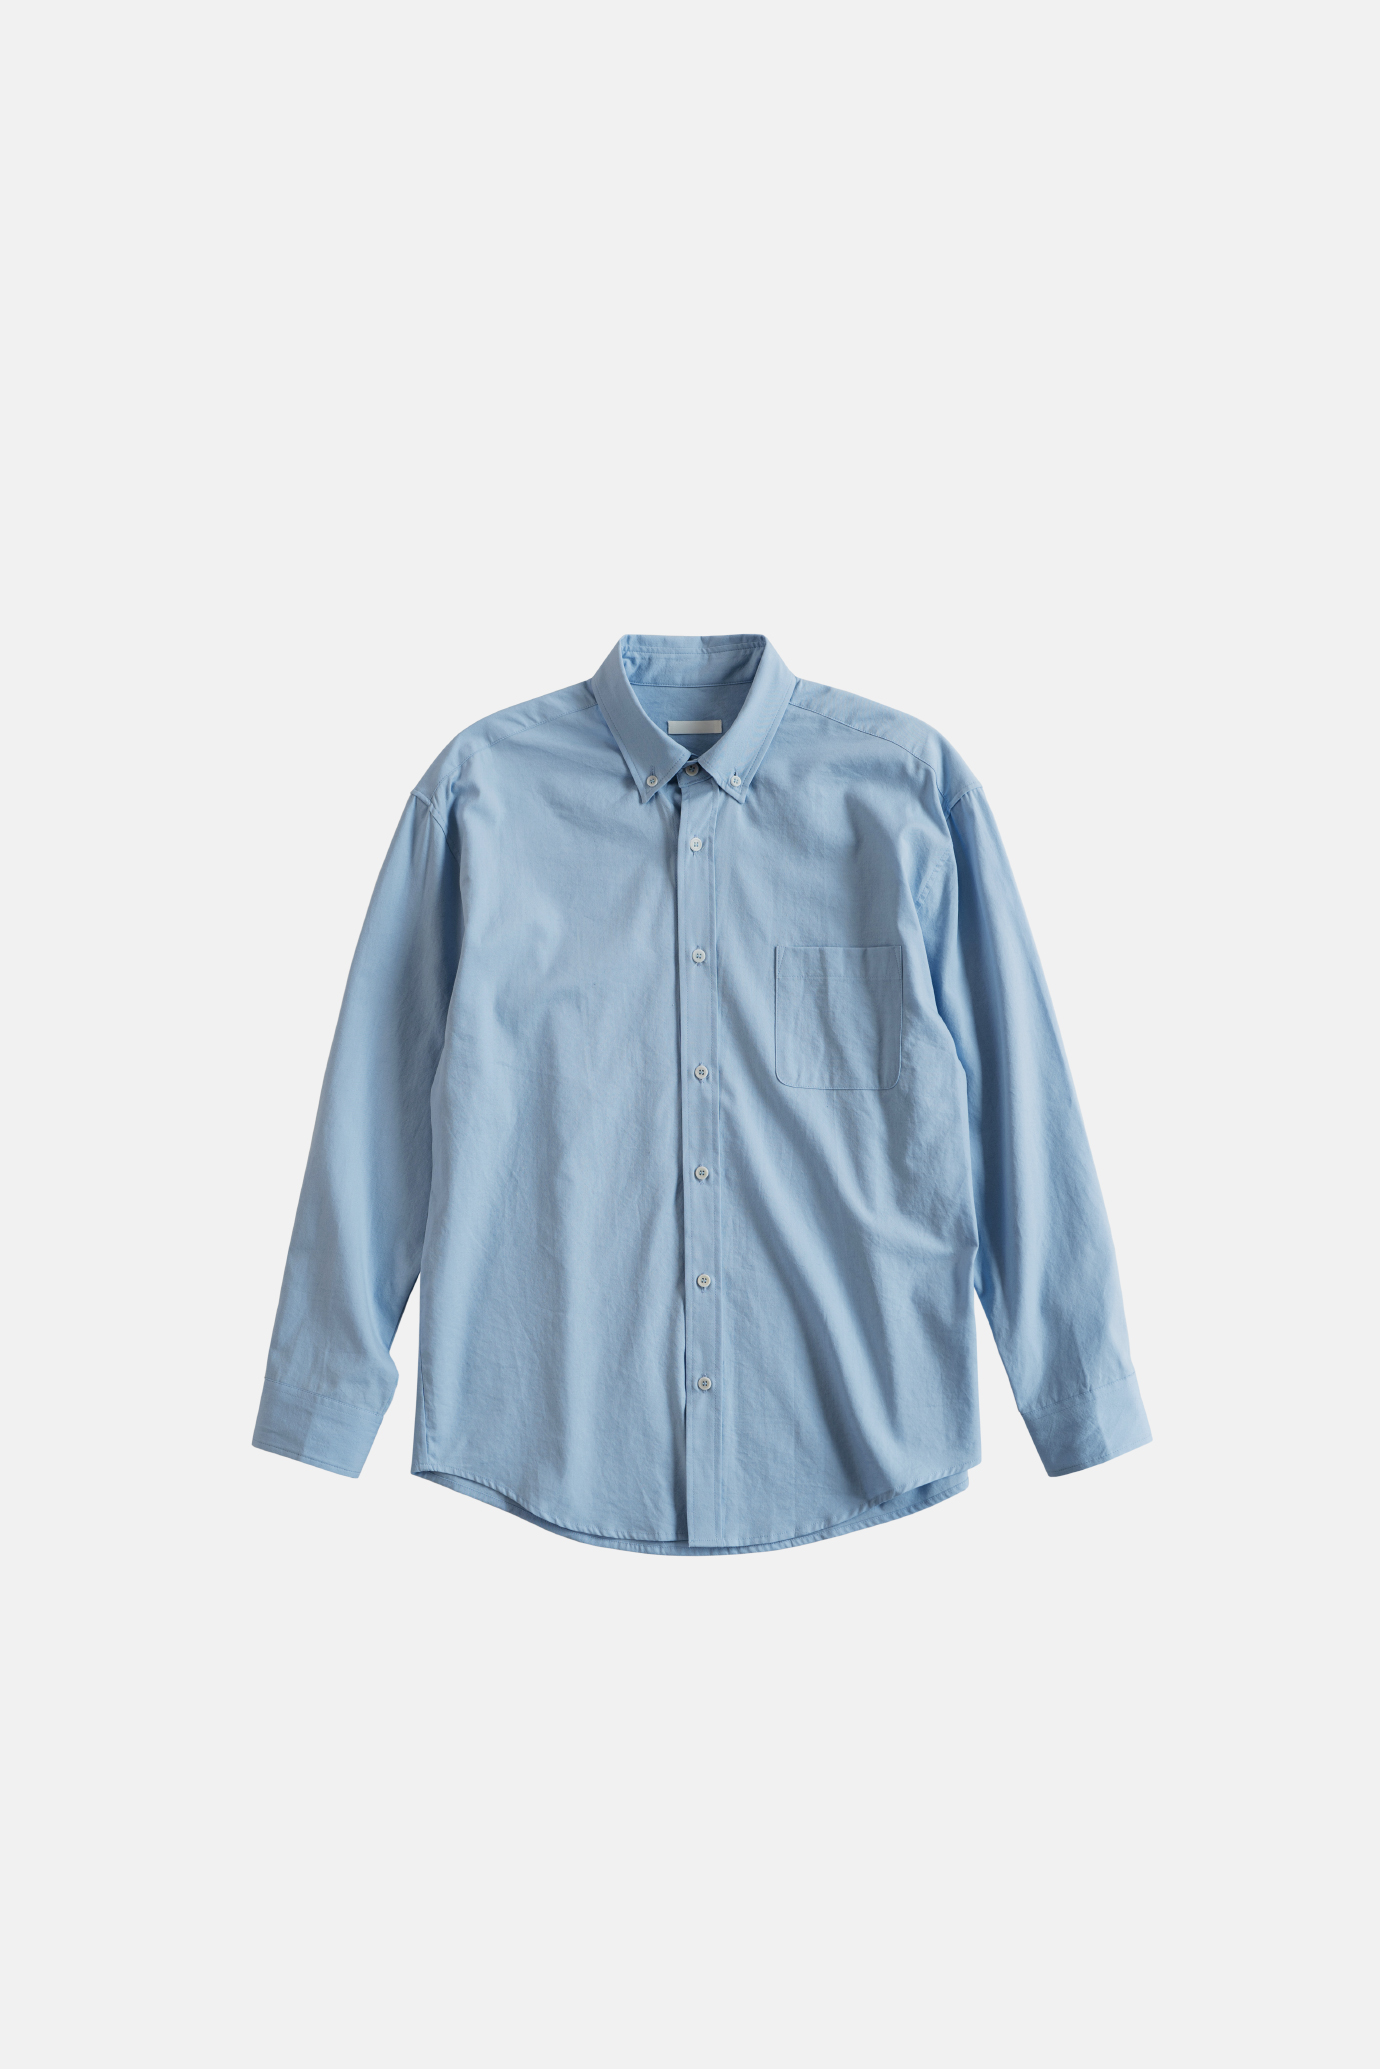 18590_Classic button shirt